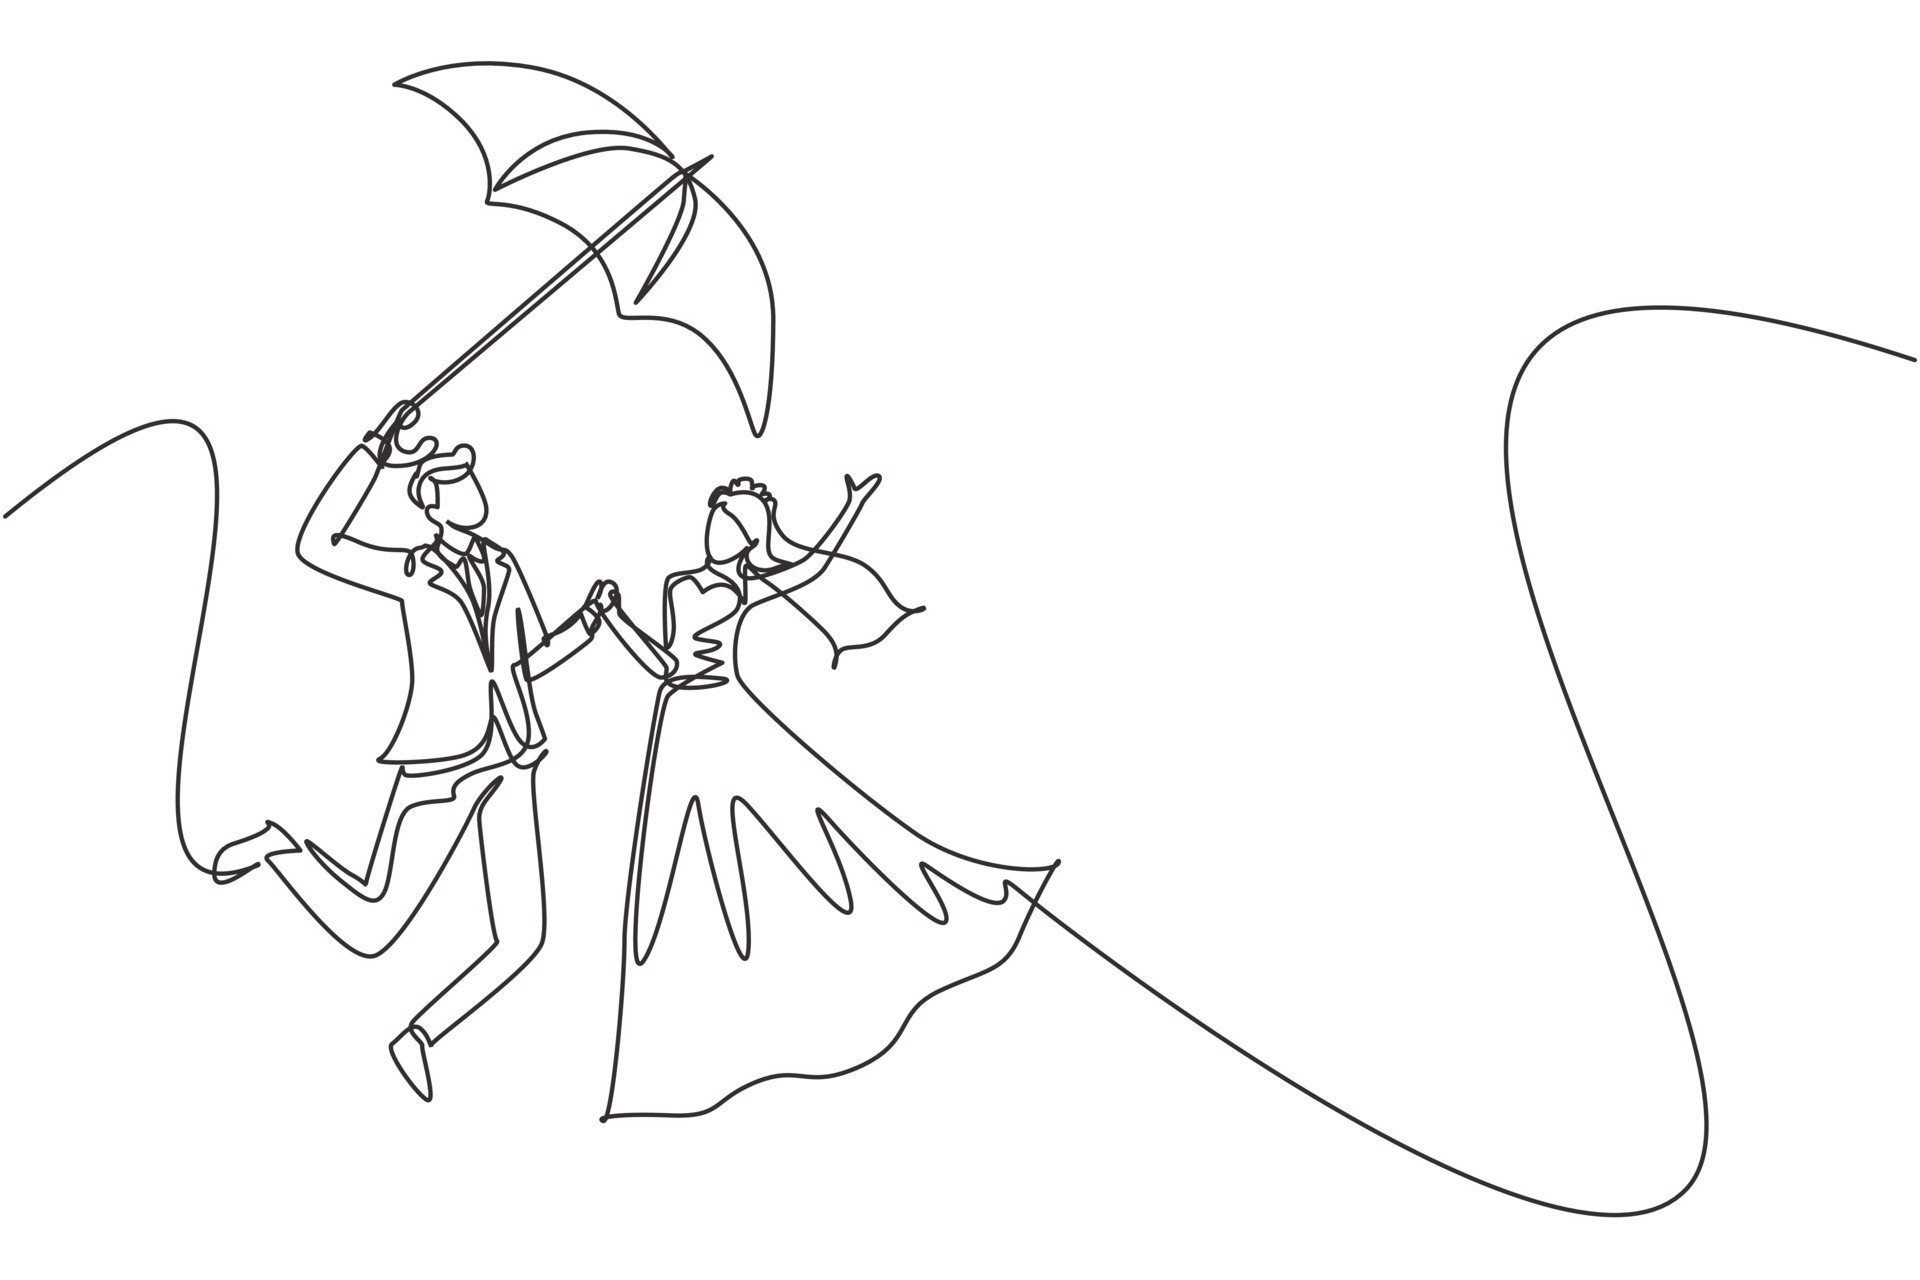 Kalaa - Learn to draw romantic couple walking together. Click here 👇  https://youtu.be/SbsifDzOa00 #pencildrawing #sketchbook #drawingvideo  #drawingtutorial #drawing #sketch #learndrawing #onlinedrawingclass  #onlinedrawingclasses | Facebook